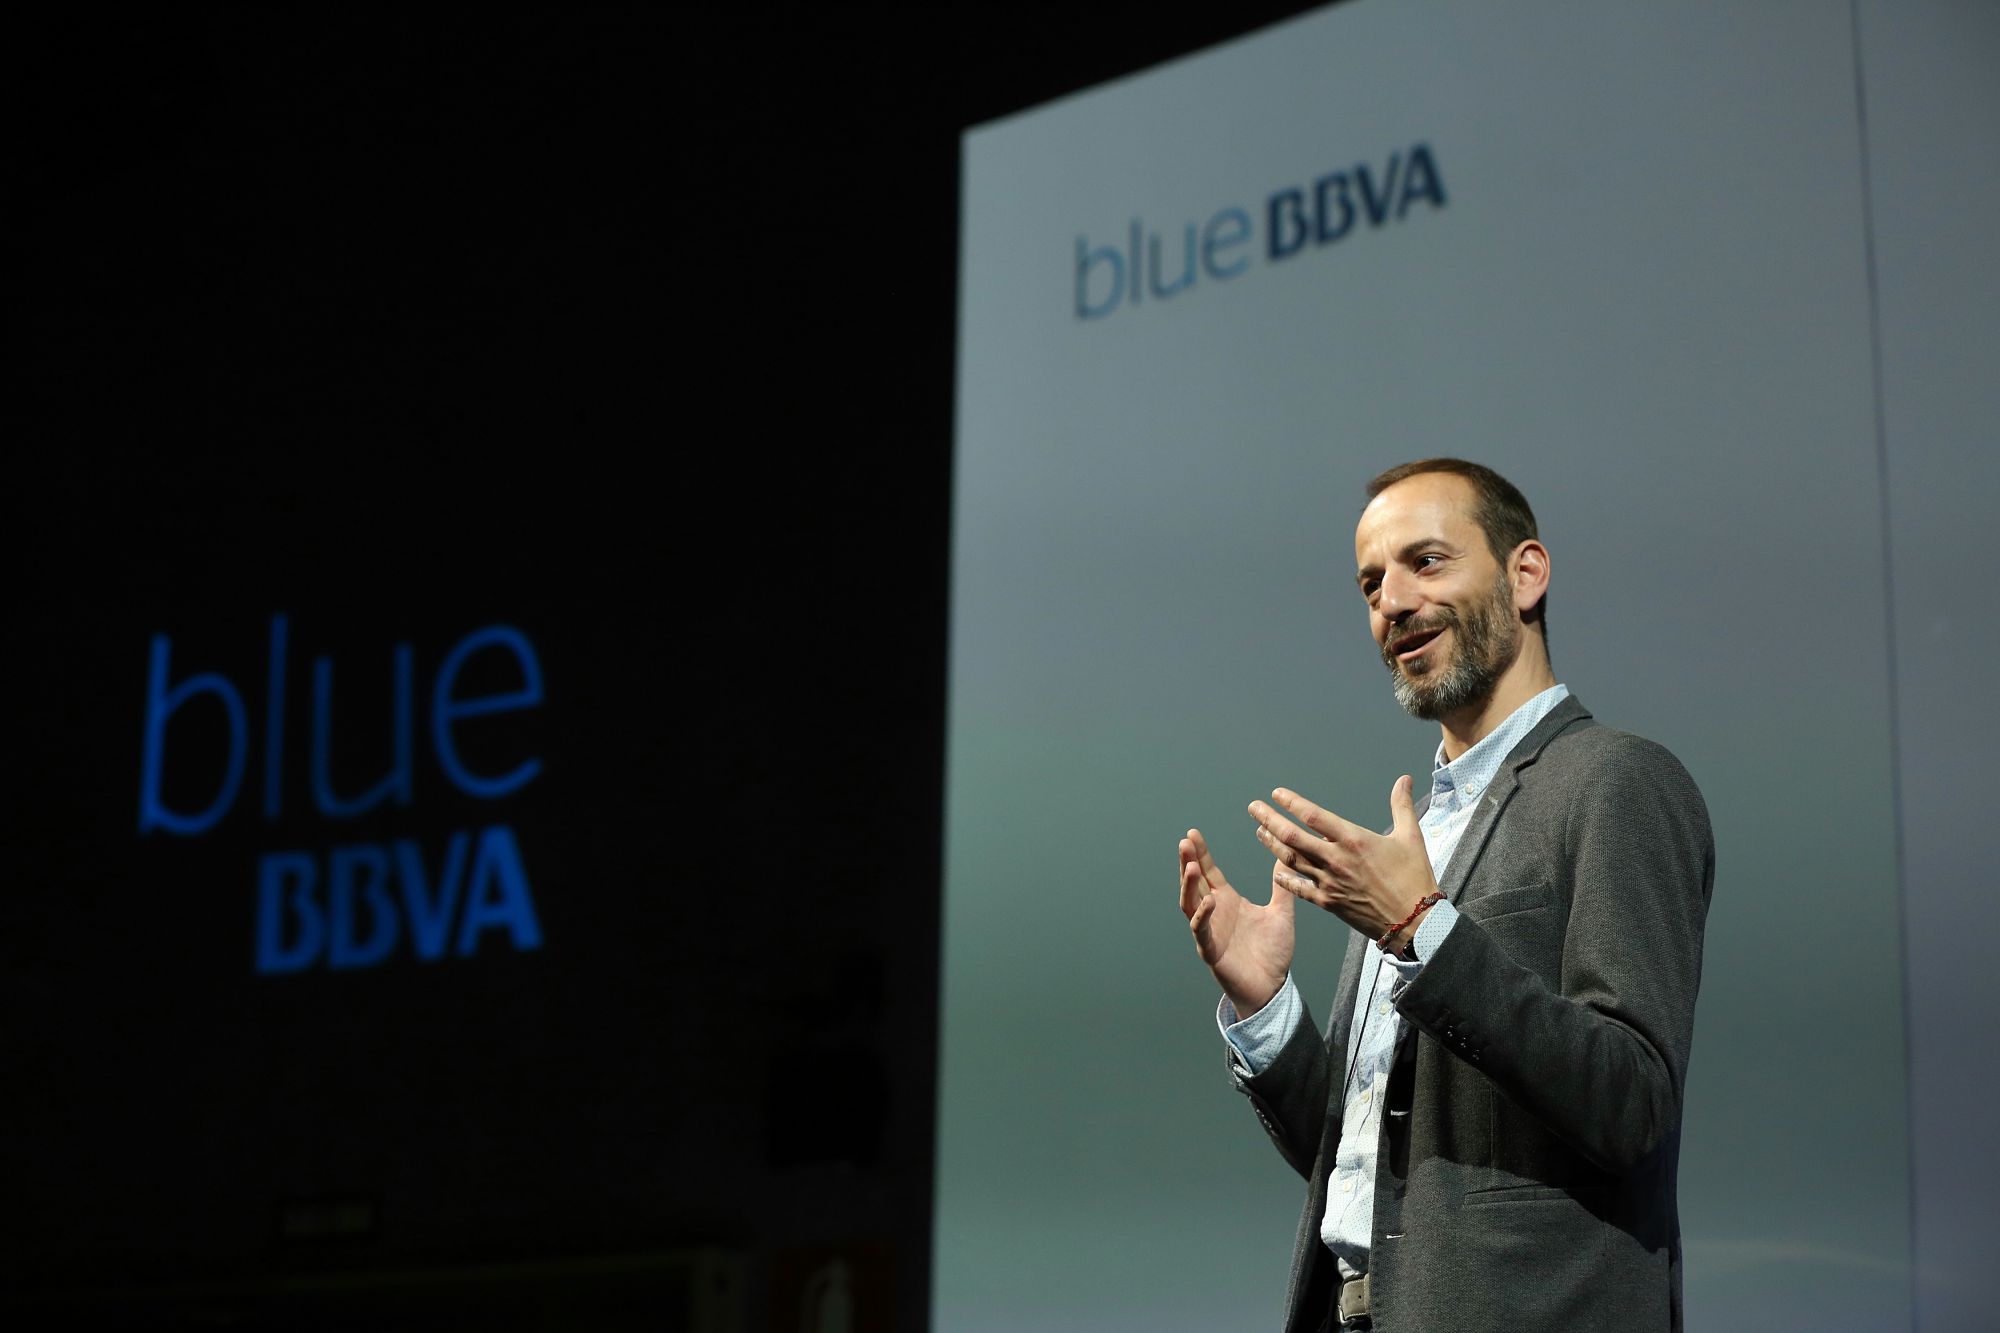 Blue BBVA Challenge